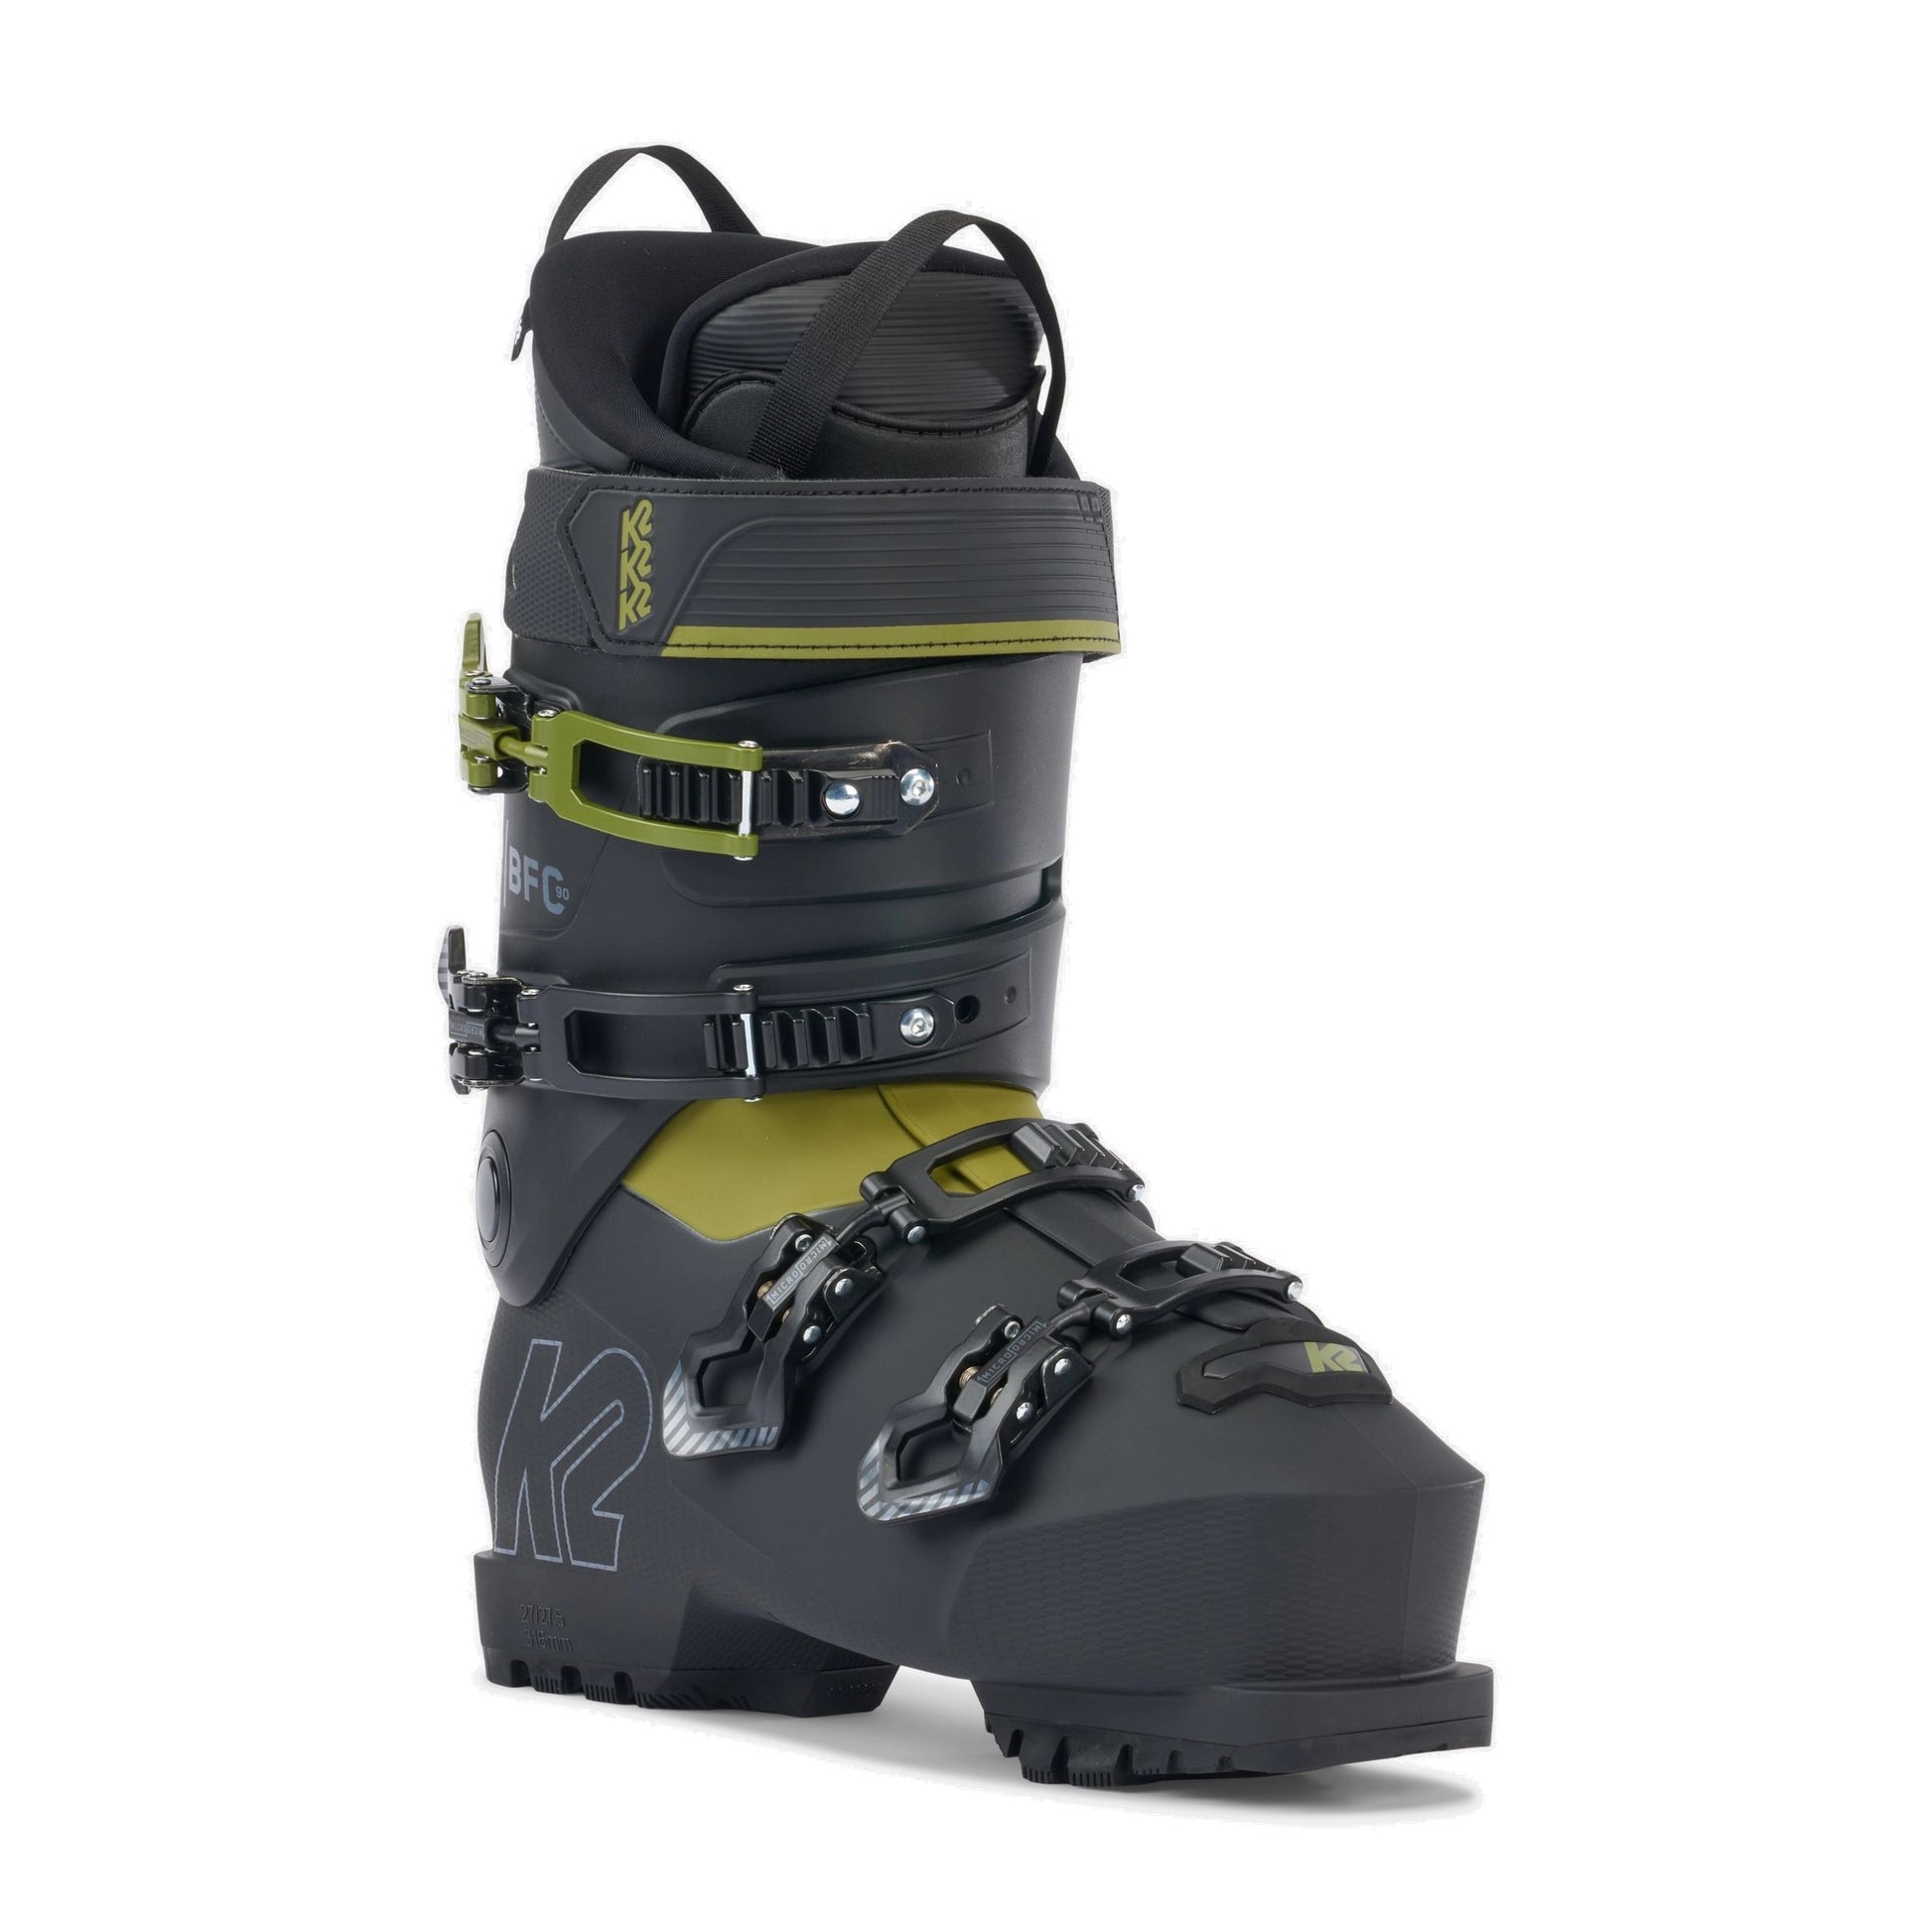 K2 BFC 90 Ski Boots Black/Olive Green Ski Boots